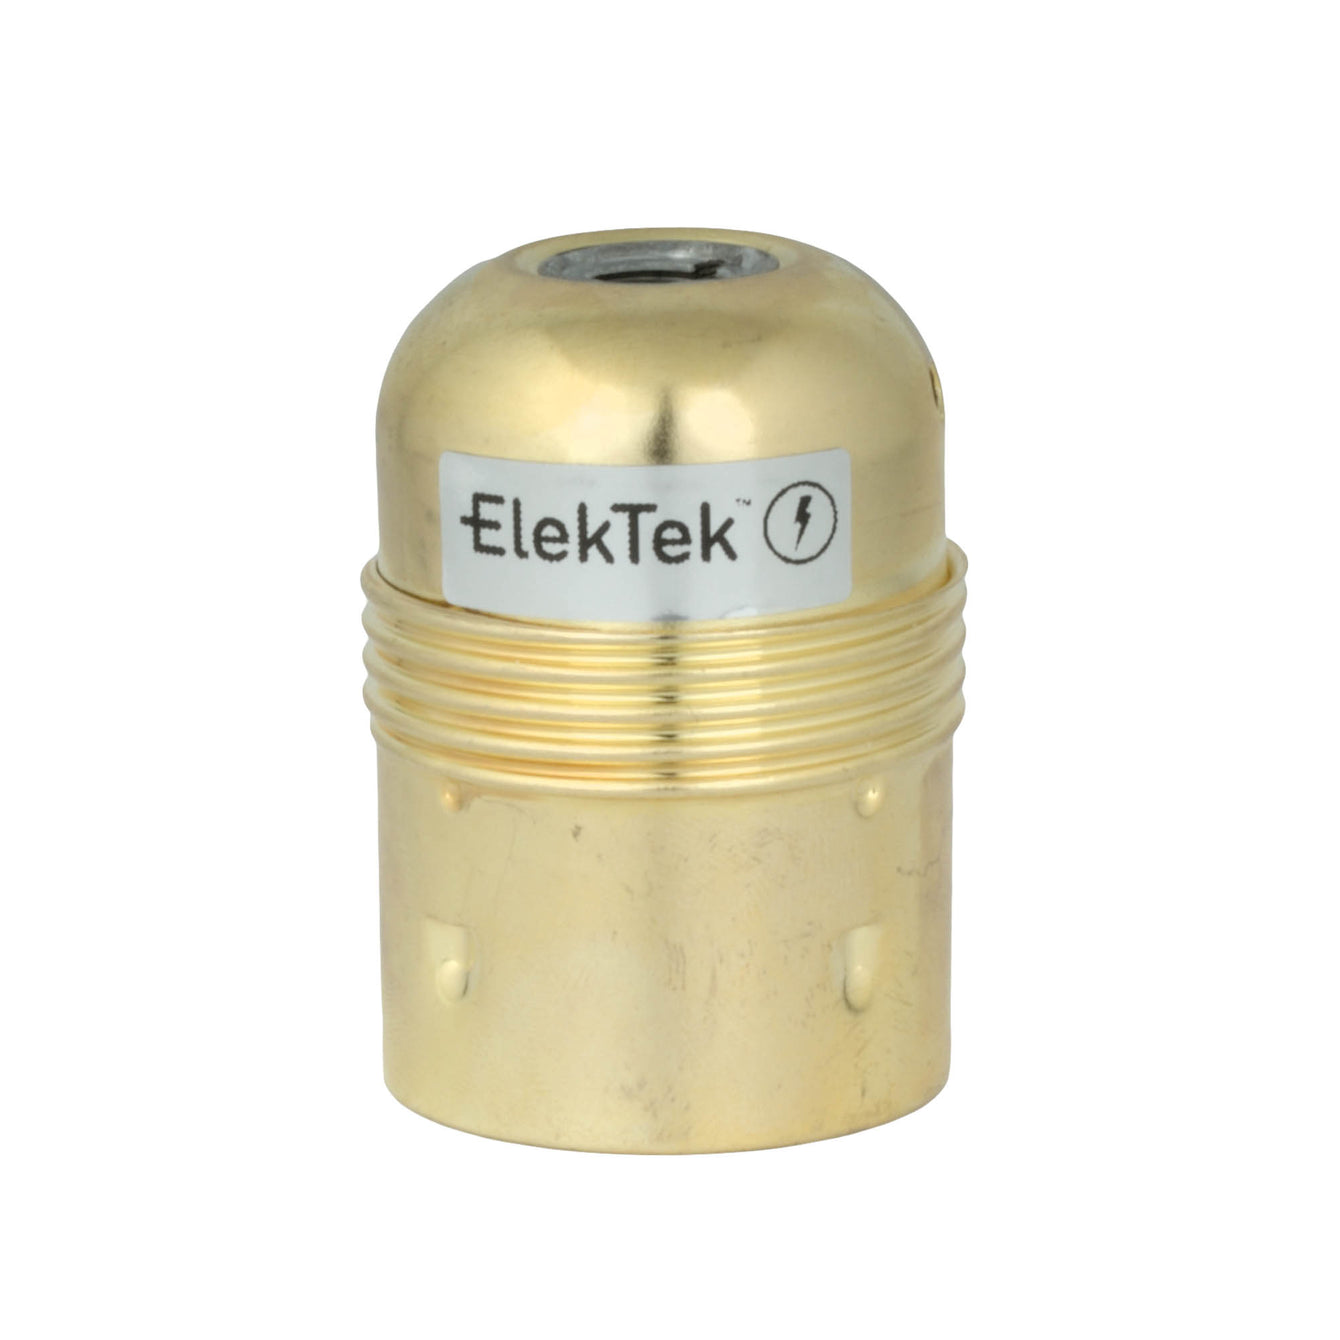 ElekTek ES Edison Screw E27 Economy Lamp Bulb Holder With Cord Grip Plain Skirt Brass and Nickel Plated Steel - Buy It Better Nickel